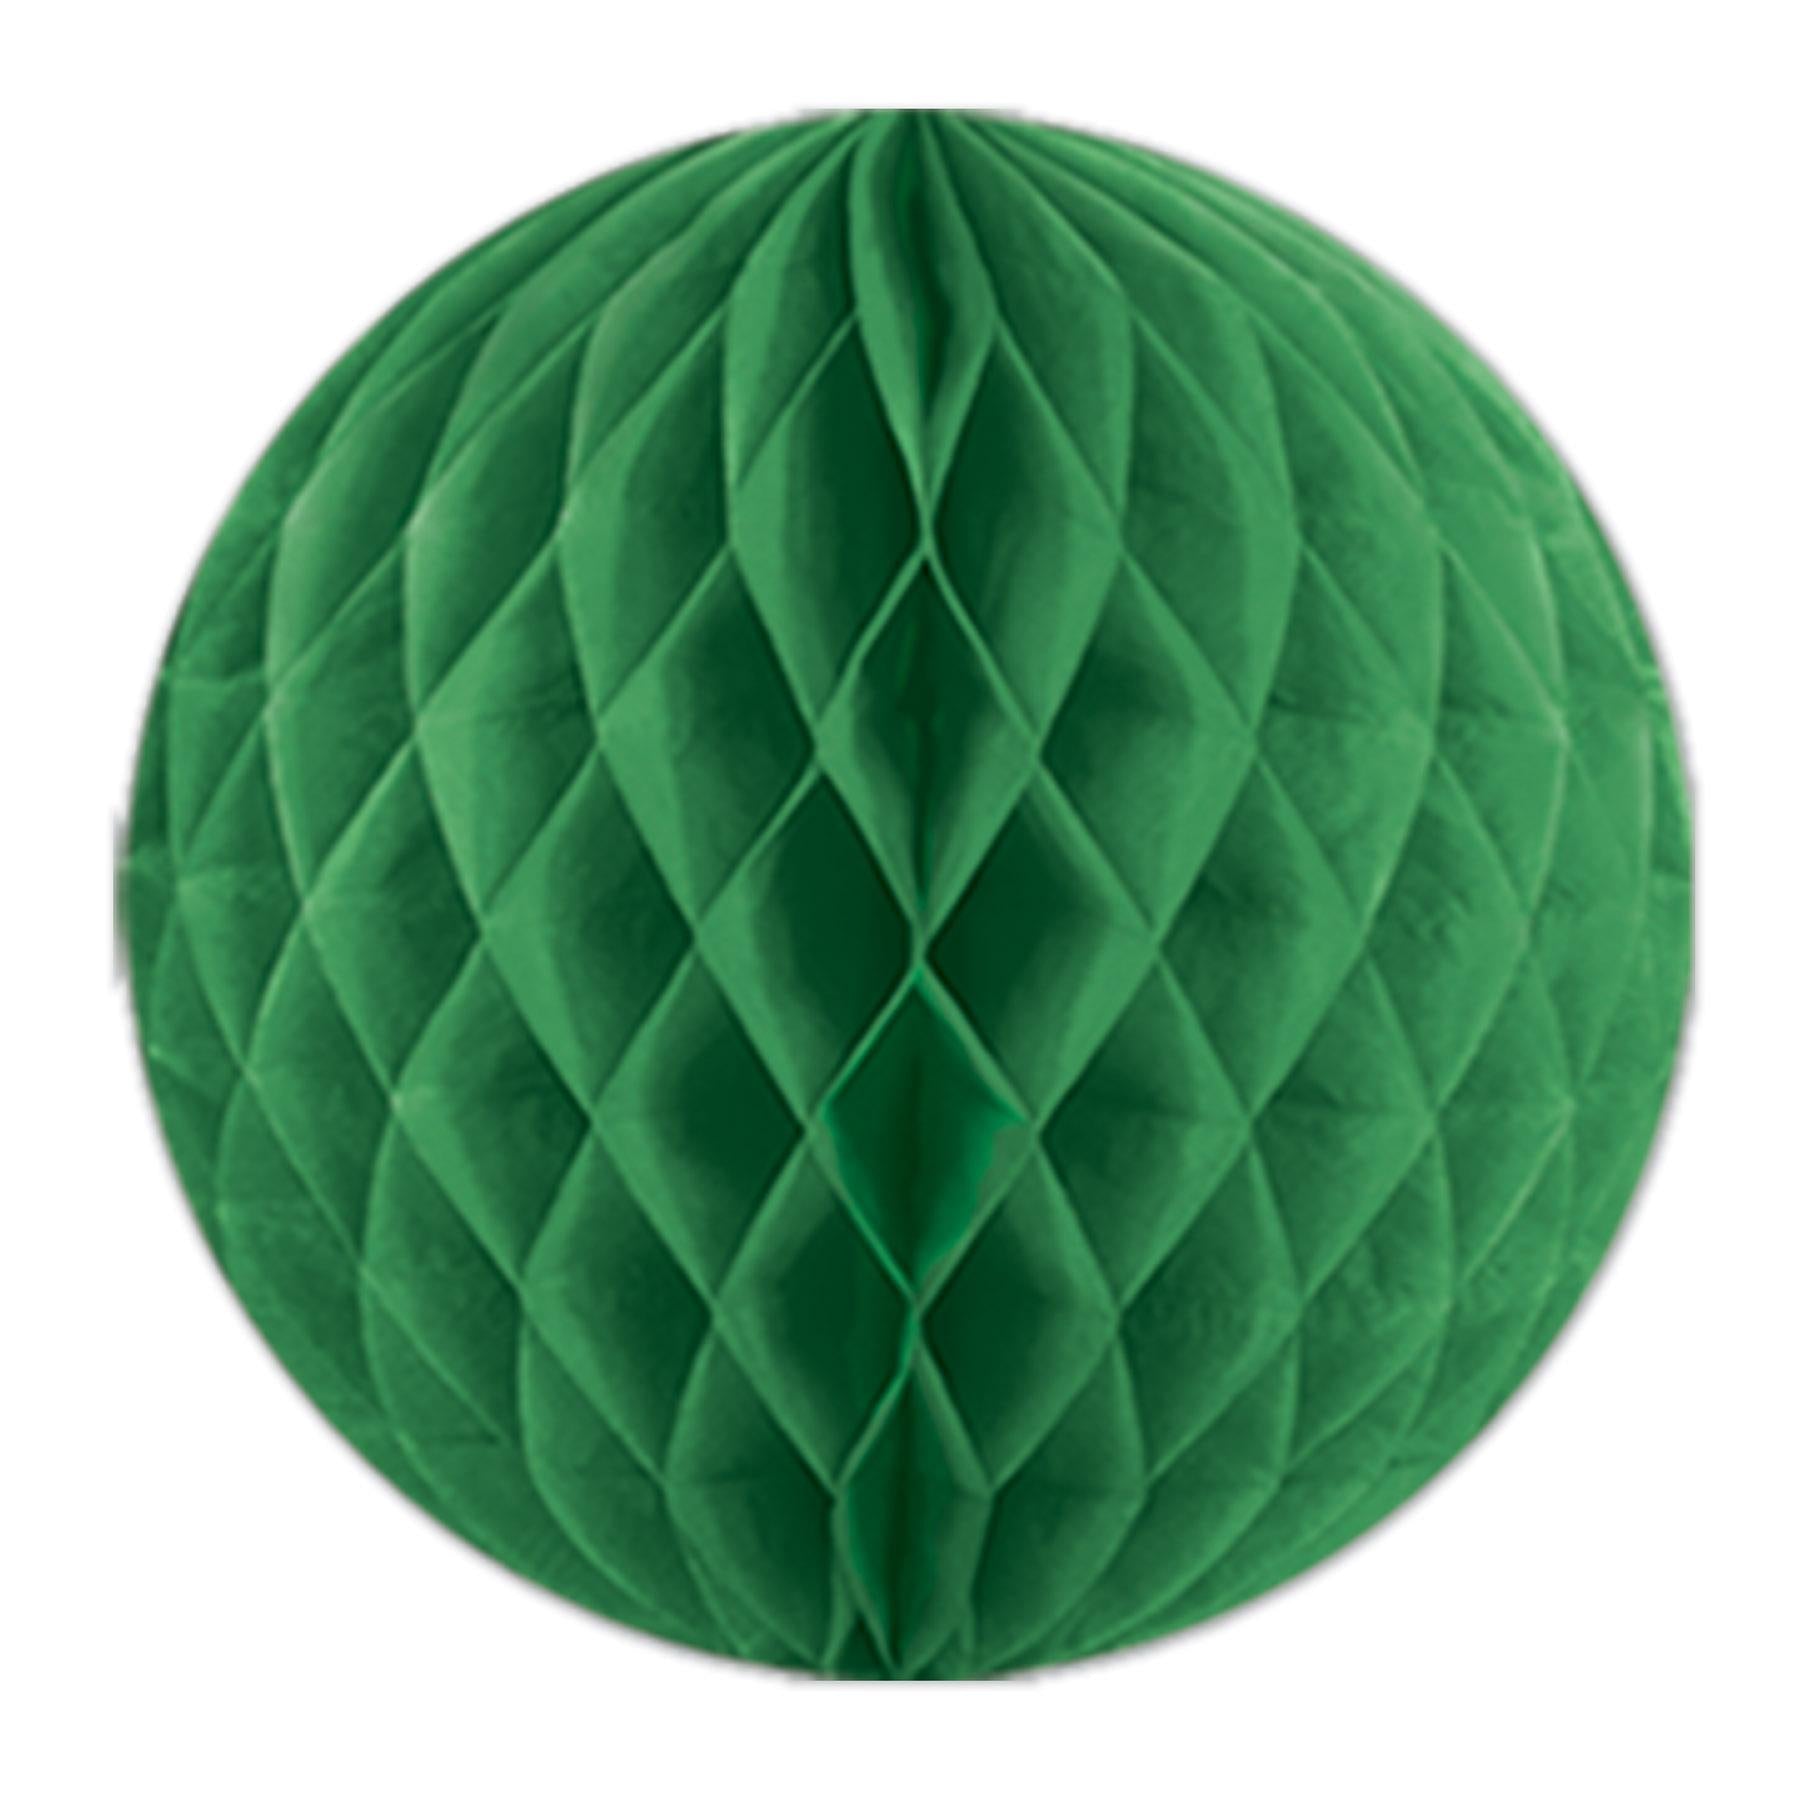 Beistle Party Tissue Ball - green